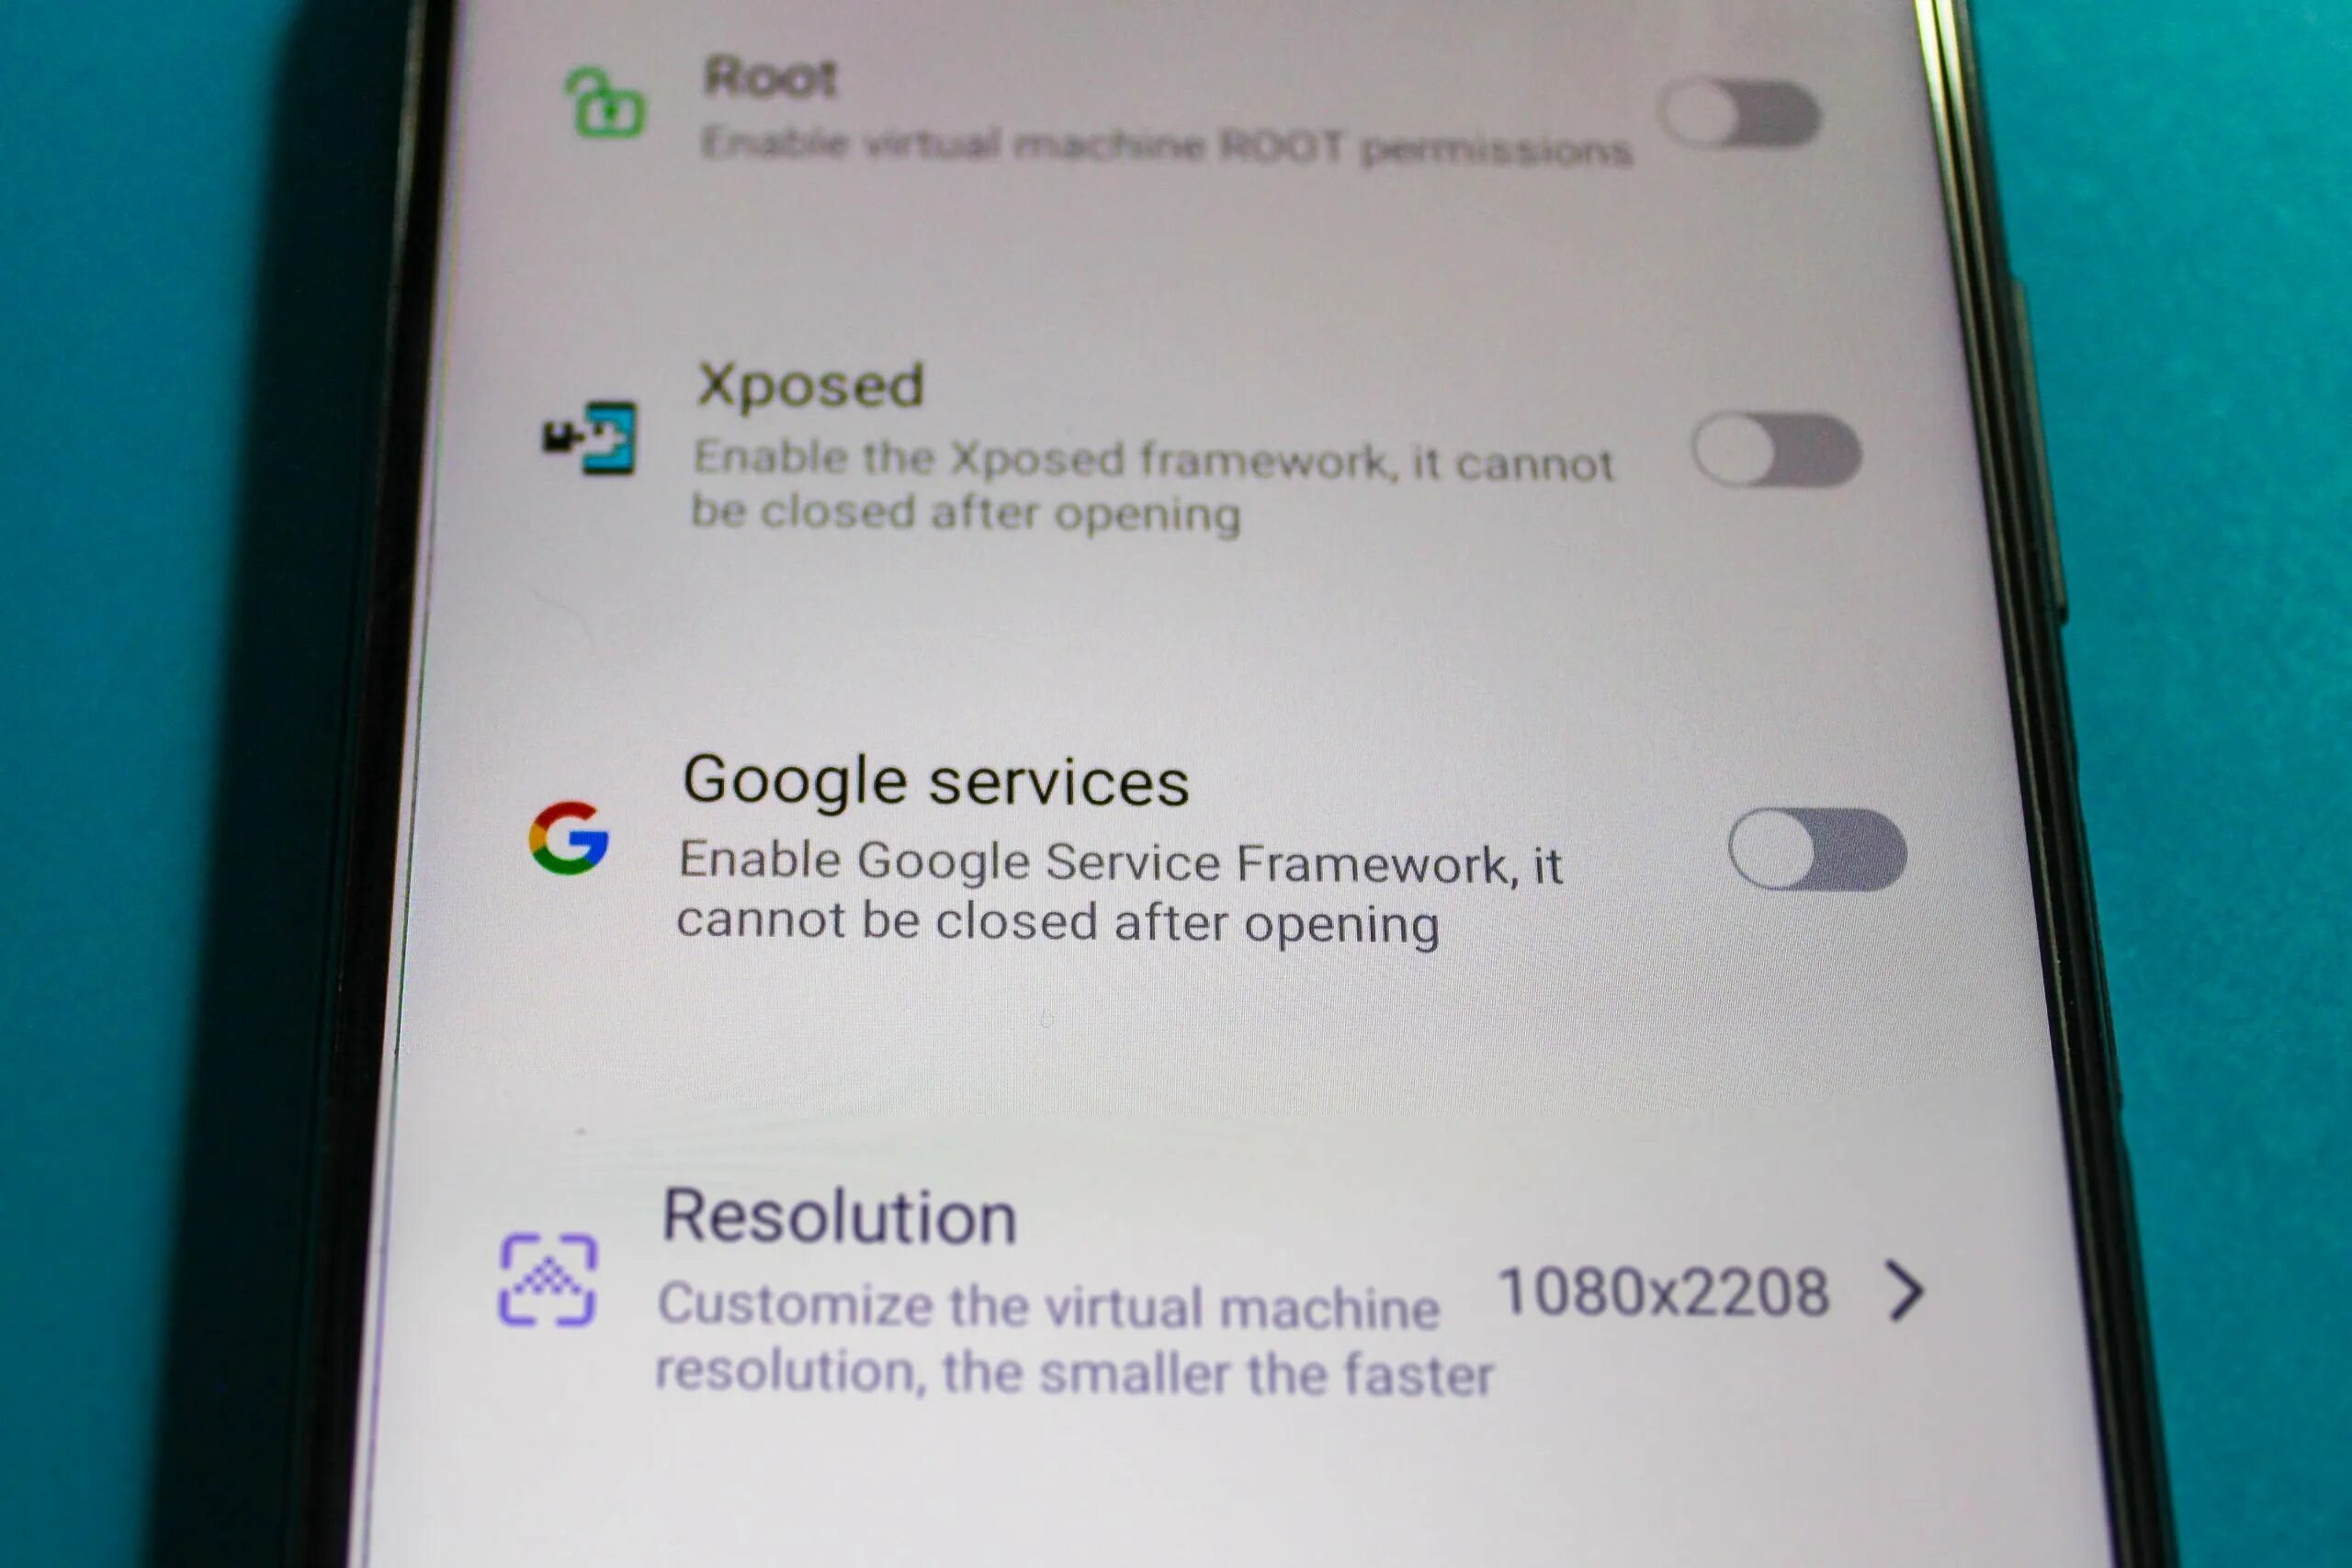 Гугл сервисы на Huawei. Как поставить гугл сервисы на Huawei. Google services Framework. Гугл фото на Хуавей. Установить гугл на андроид хуавей